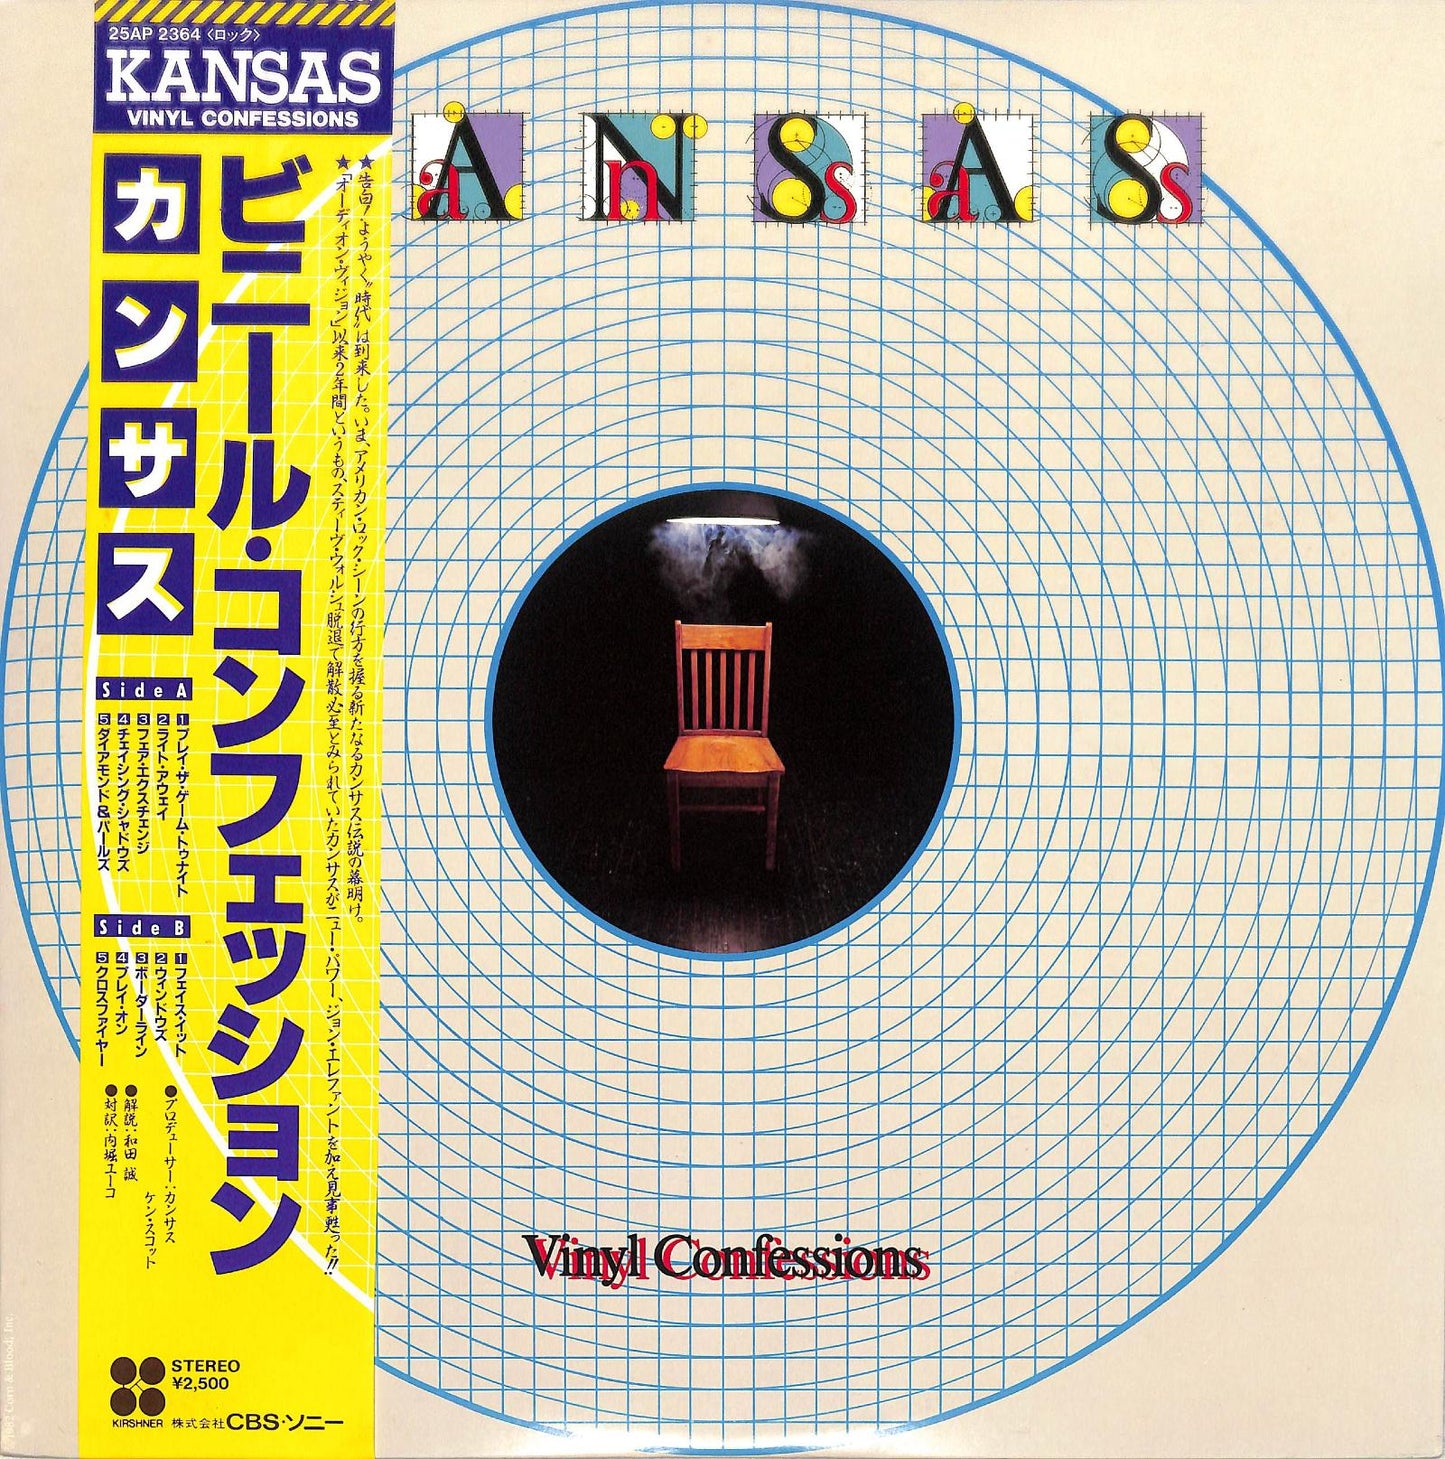 KANSAS - Vinyl Confessions